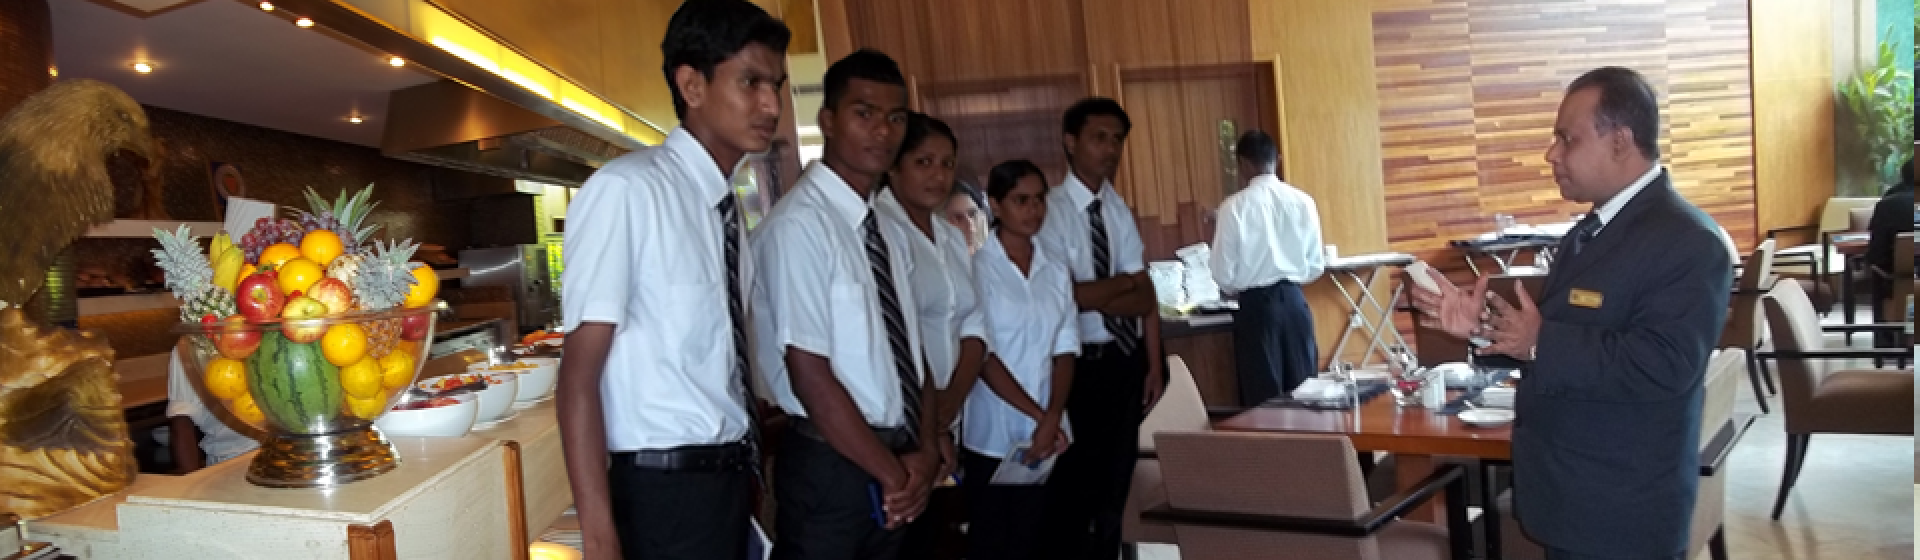 Yesman.lk - Cover Image - Colombo International Hotel School